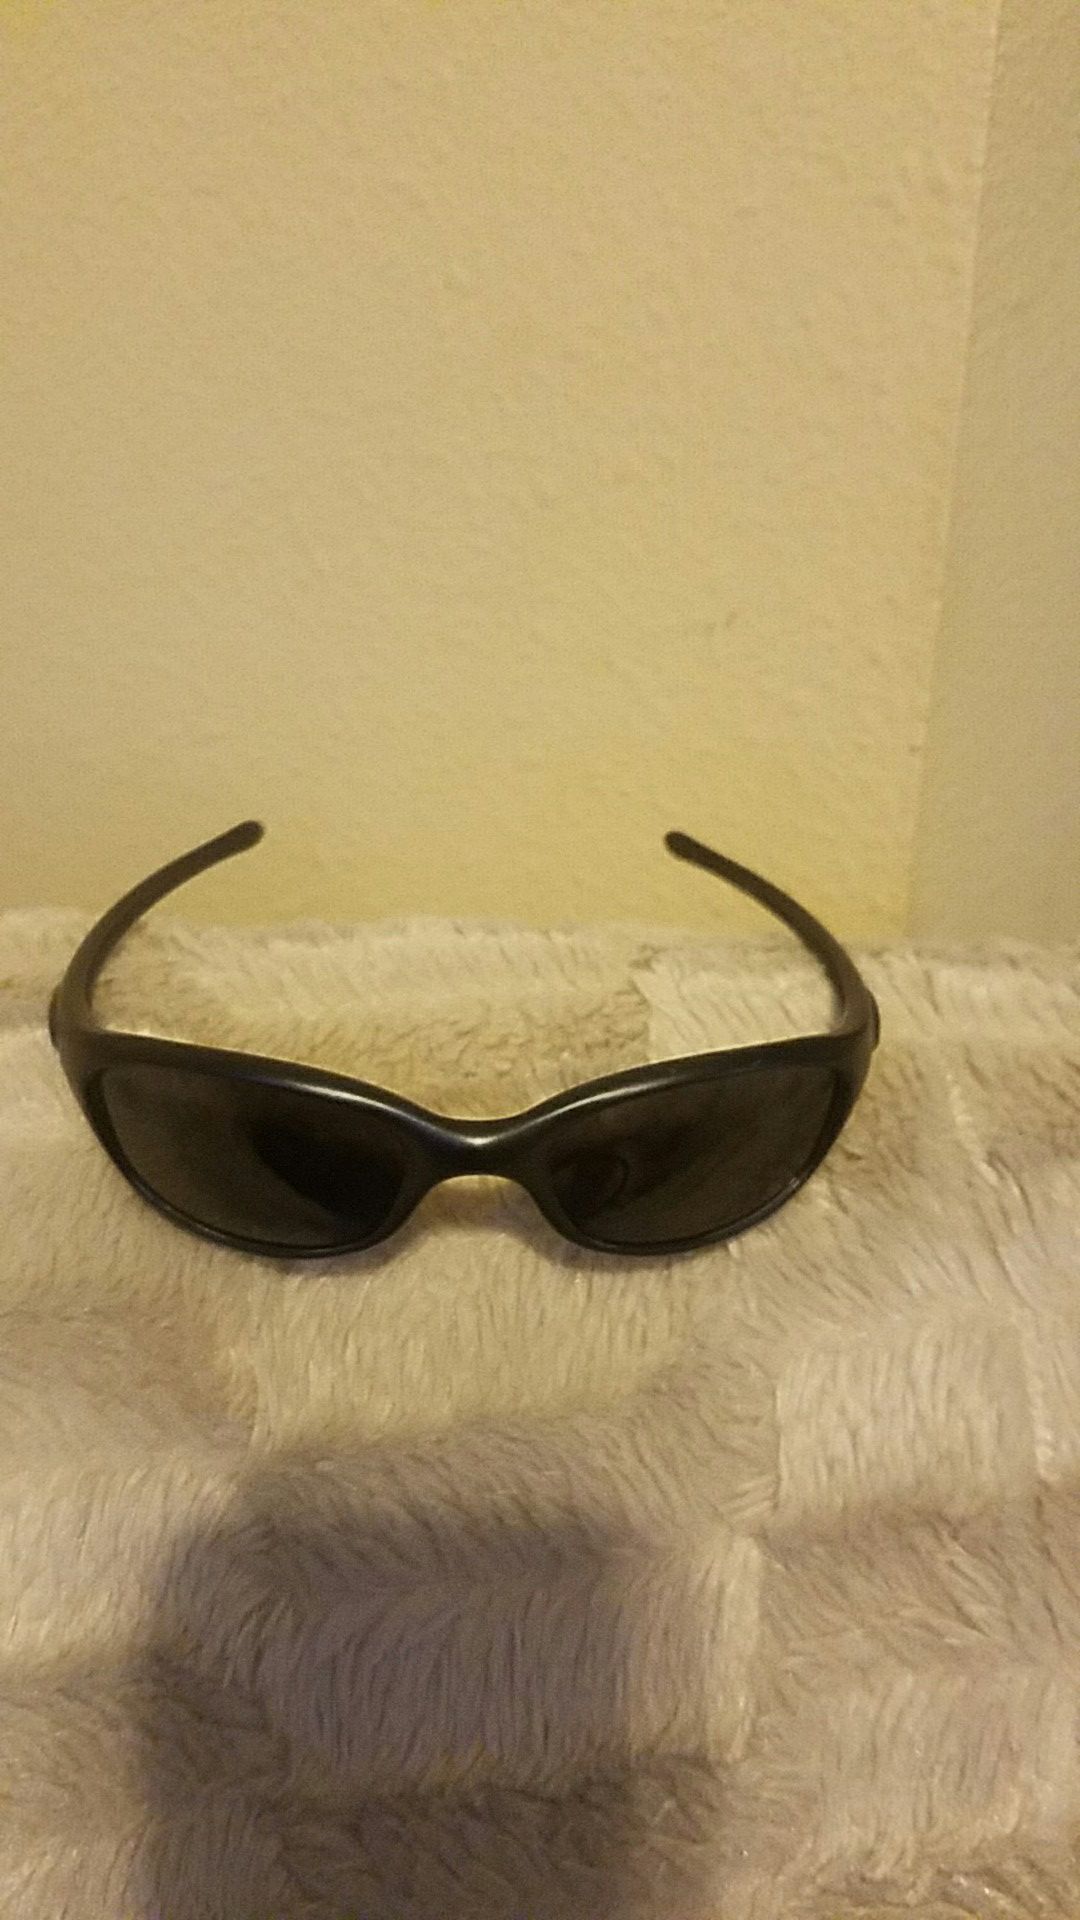 Oakley fives 2.0 polarized sunglasses and case